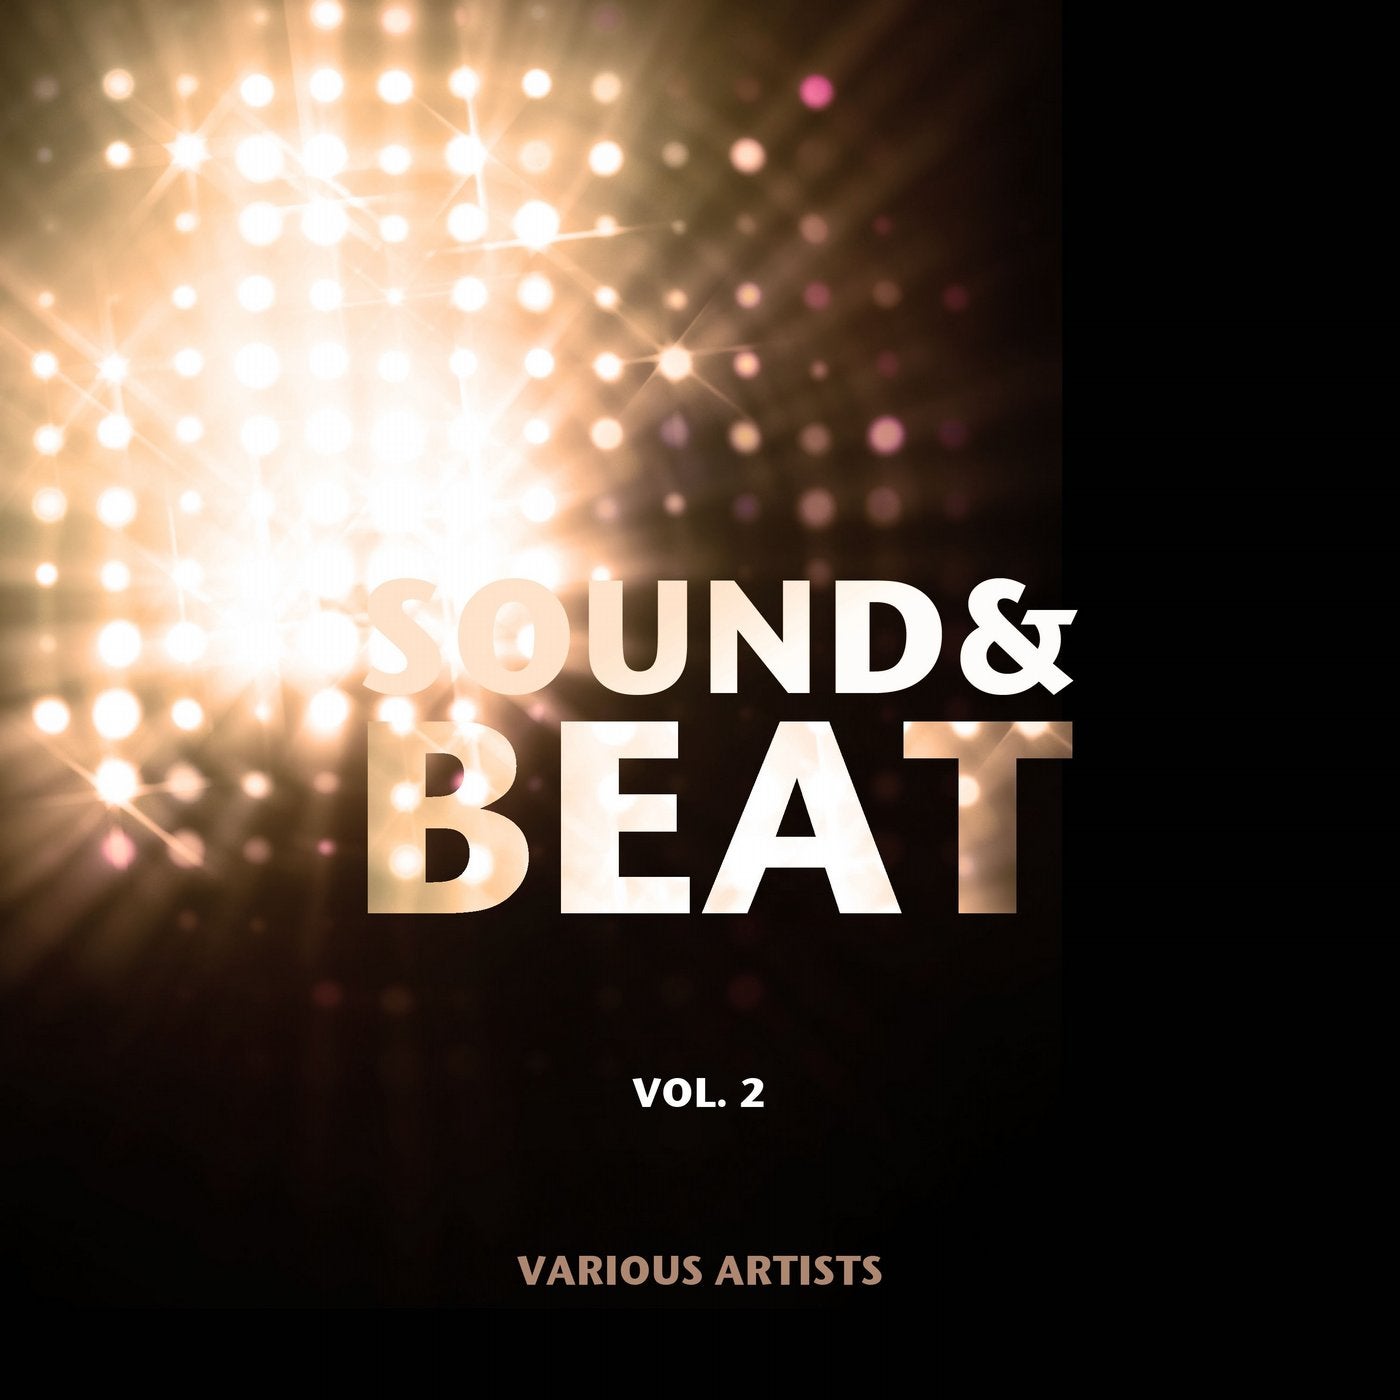 Sound & Beat, Vol. 2